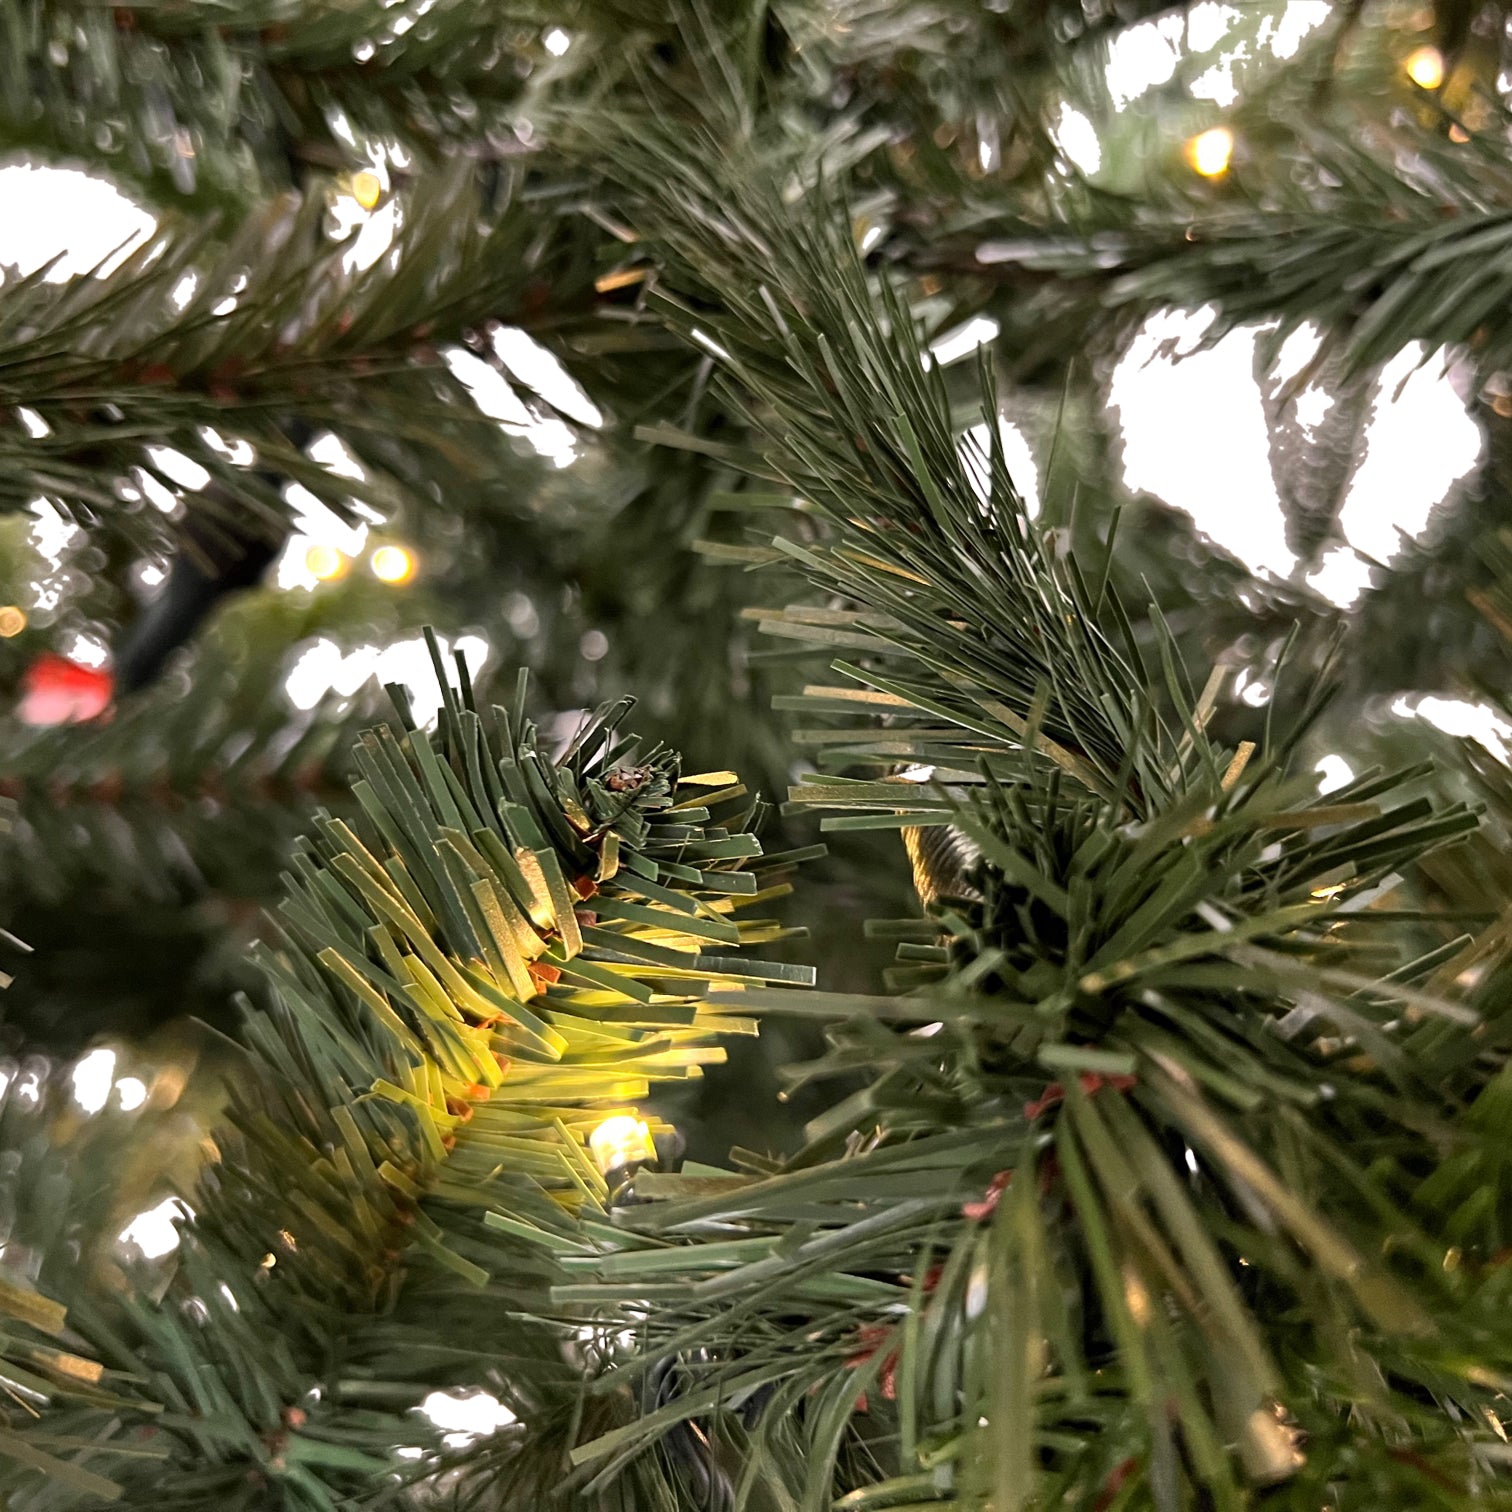 Luxe Kerstboom Excellent Trees® LED Falun Green 210 cm - 350 Lampjes